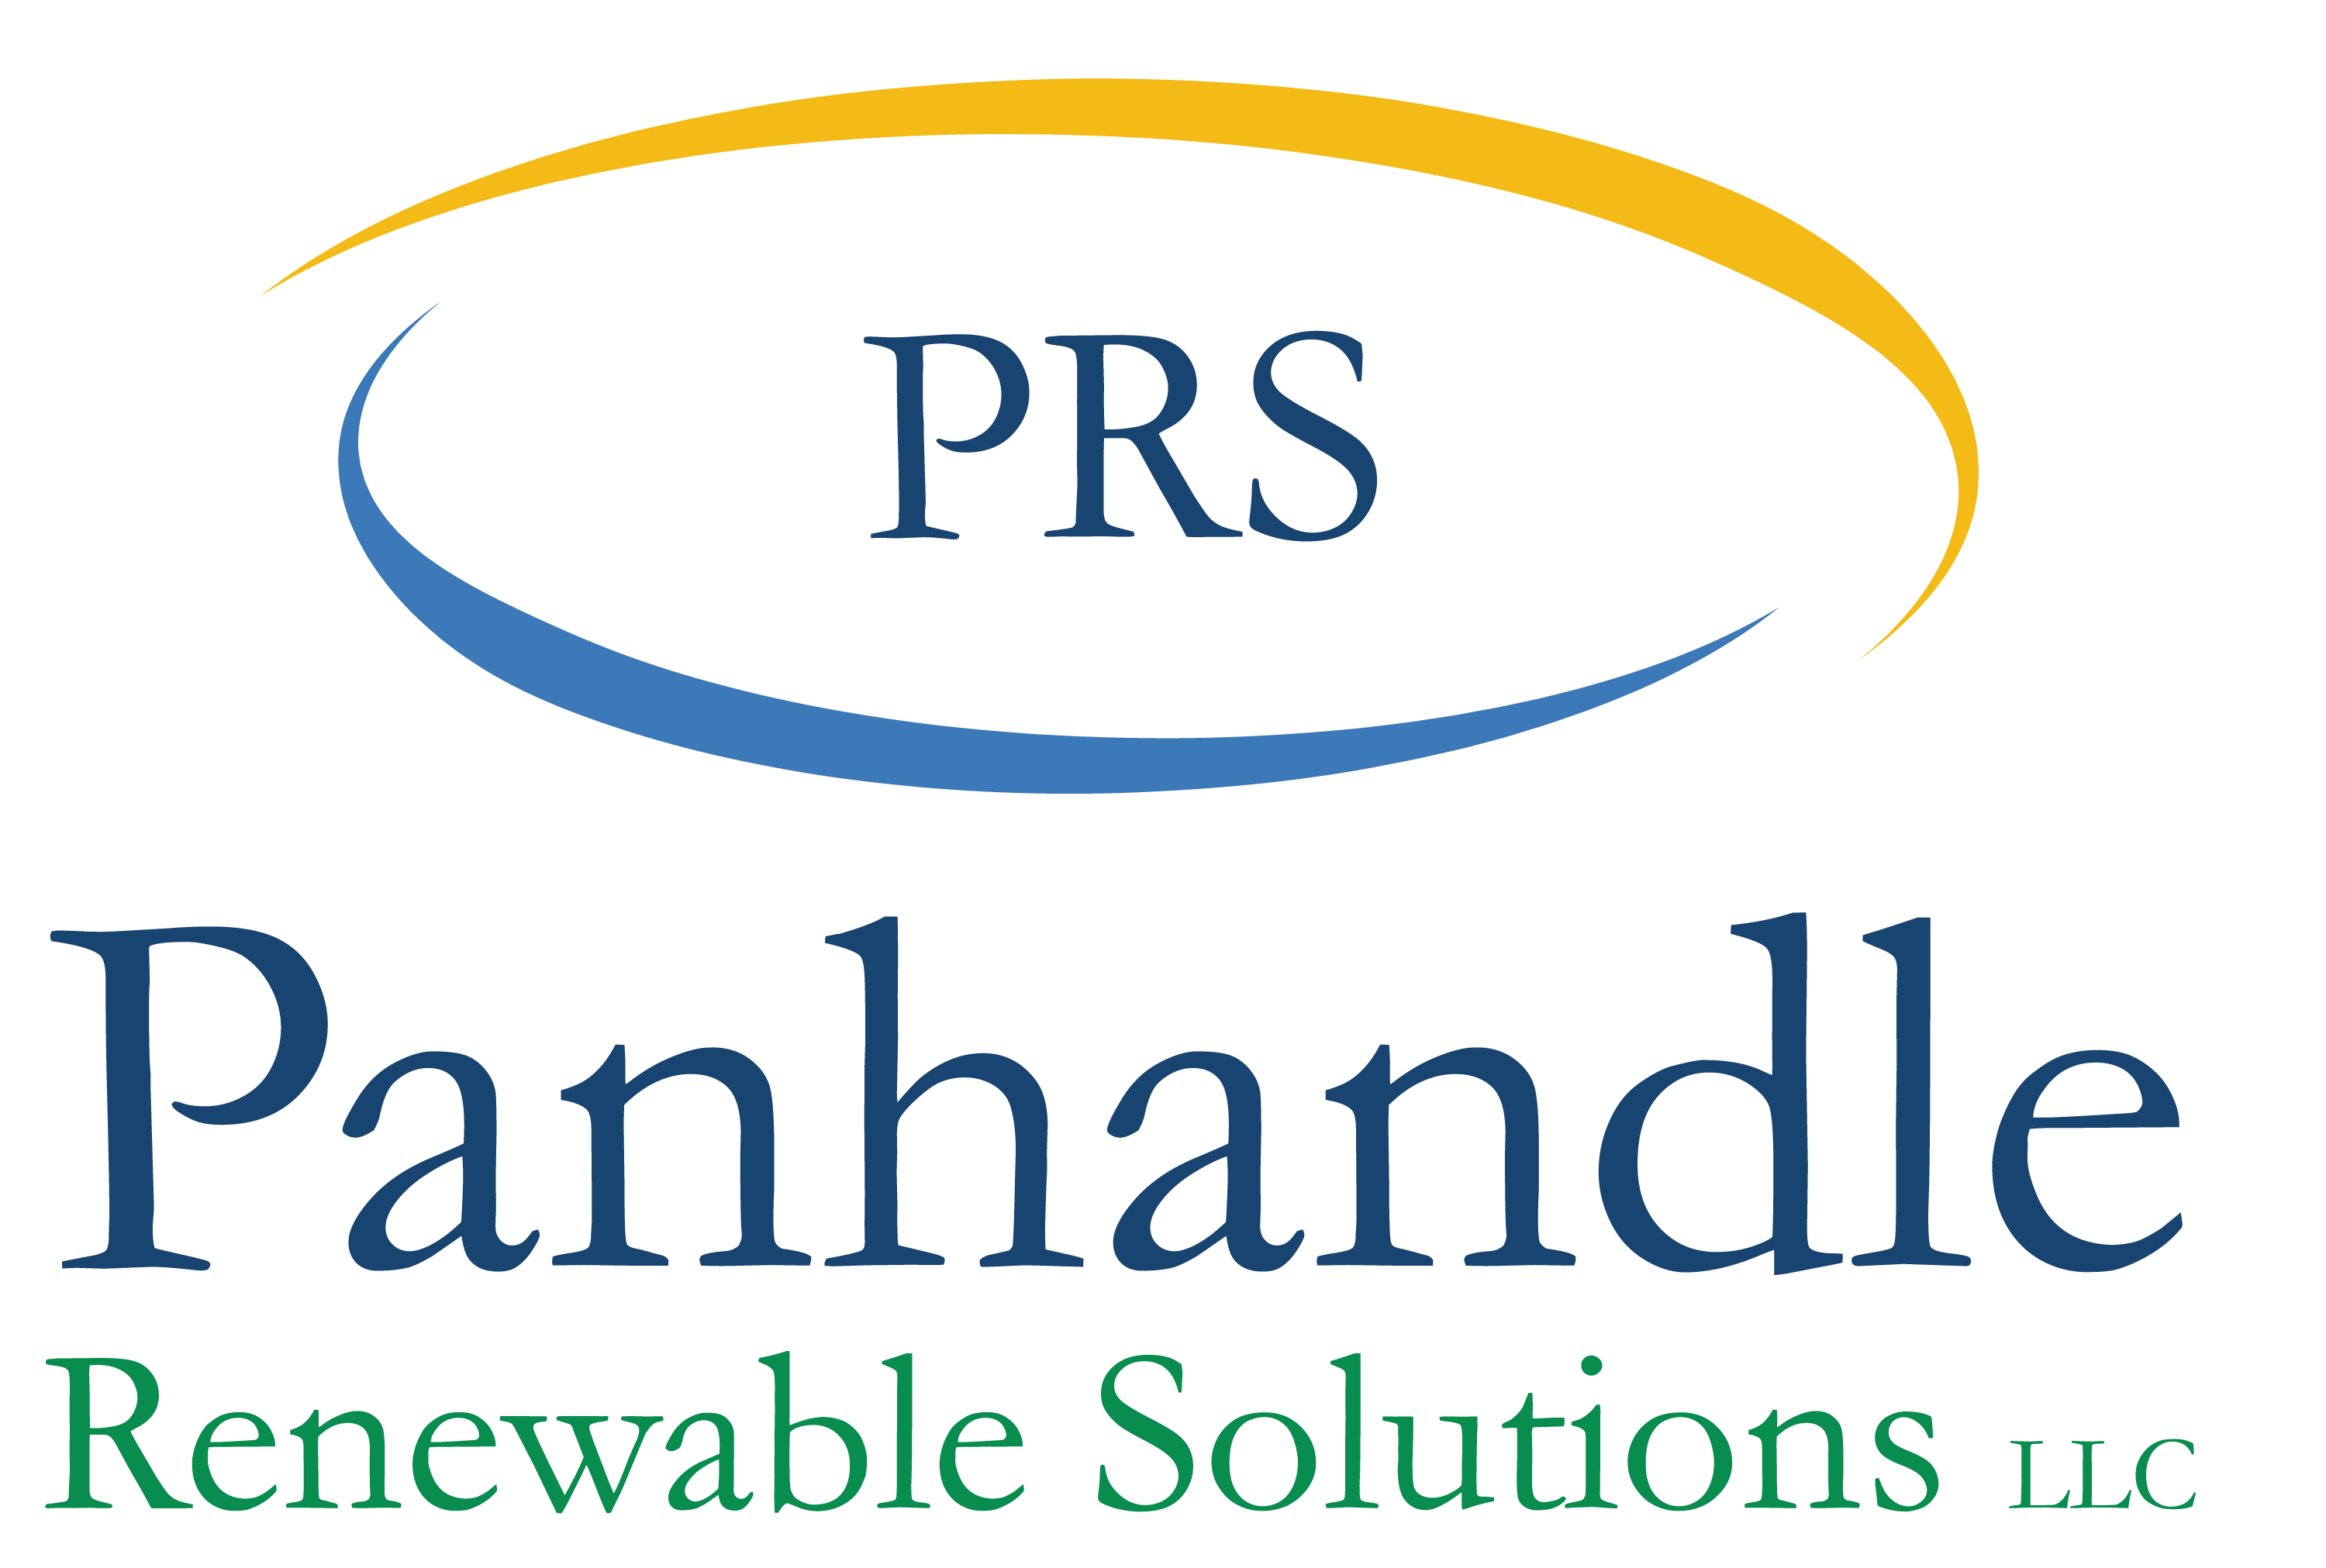 Panhandle Renewable Solutions LLC